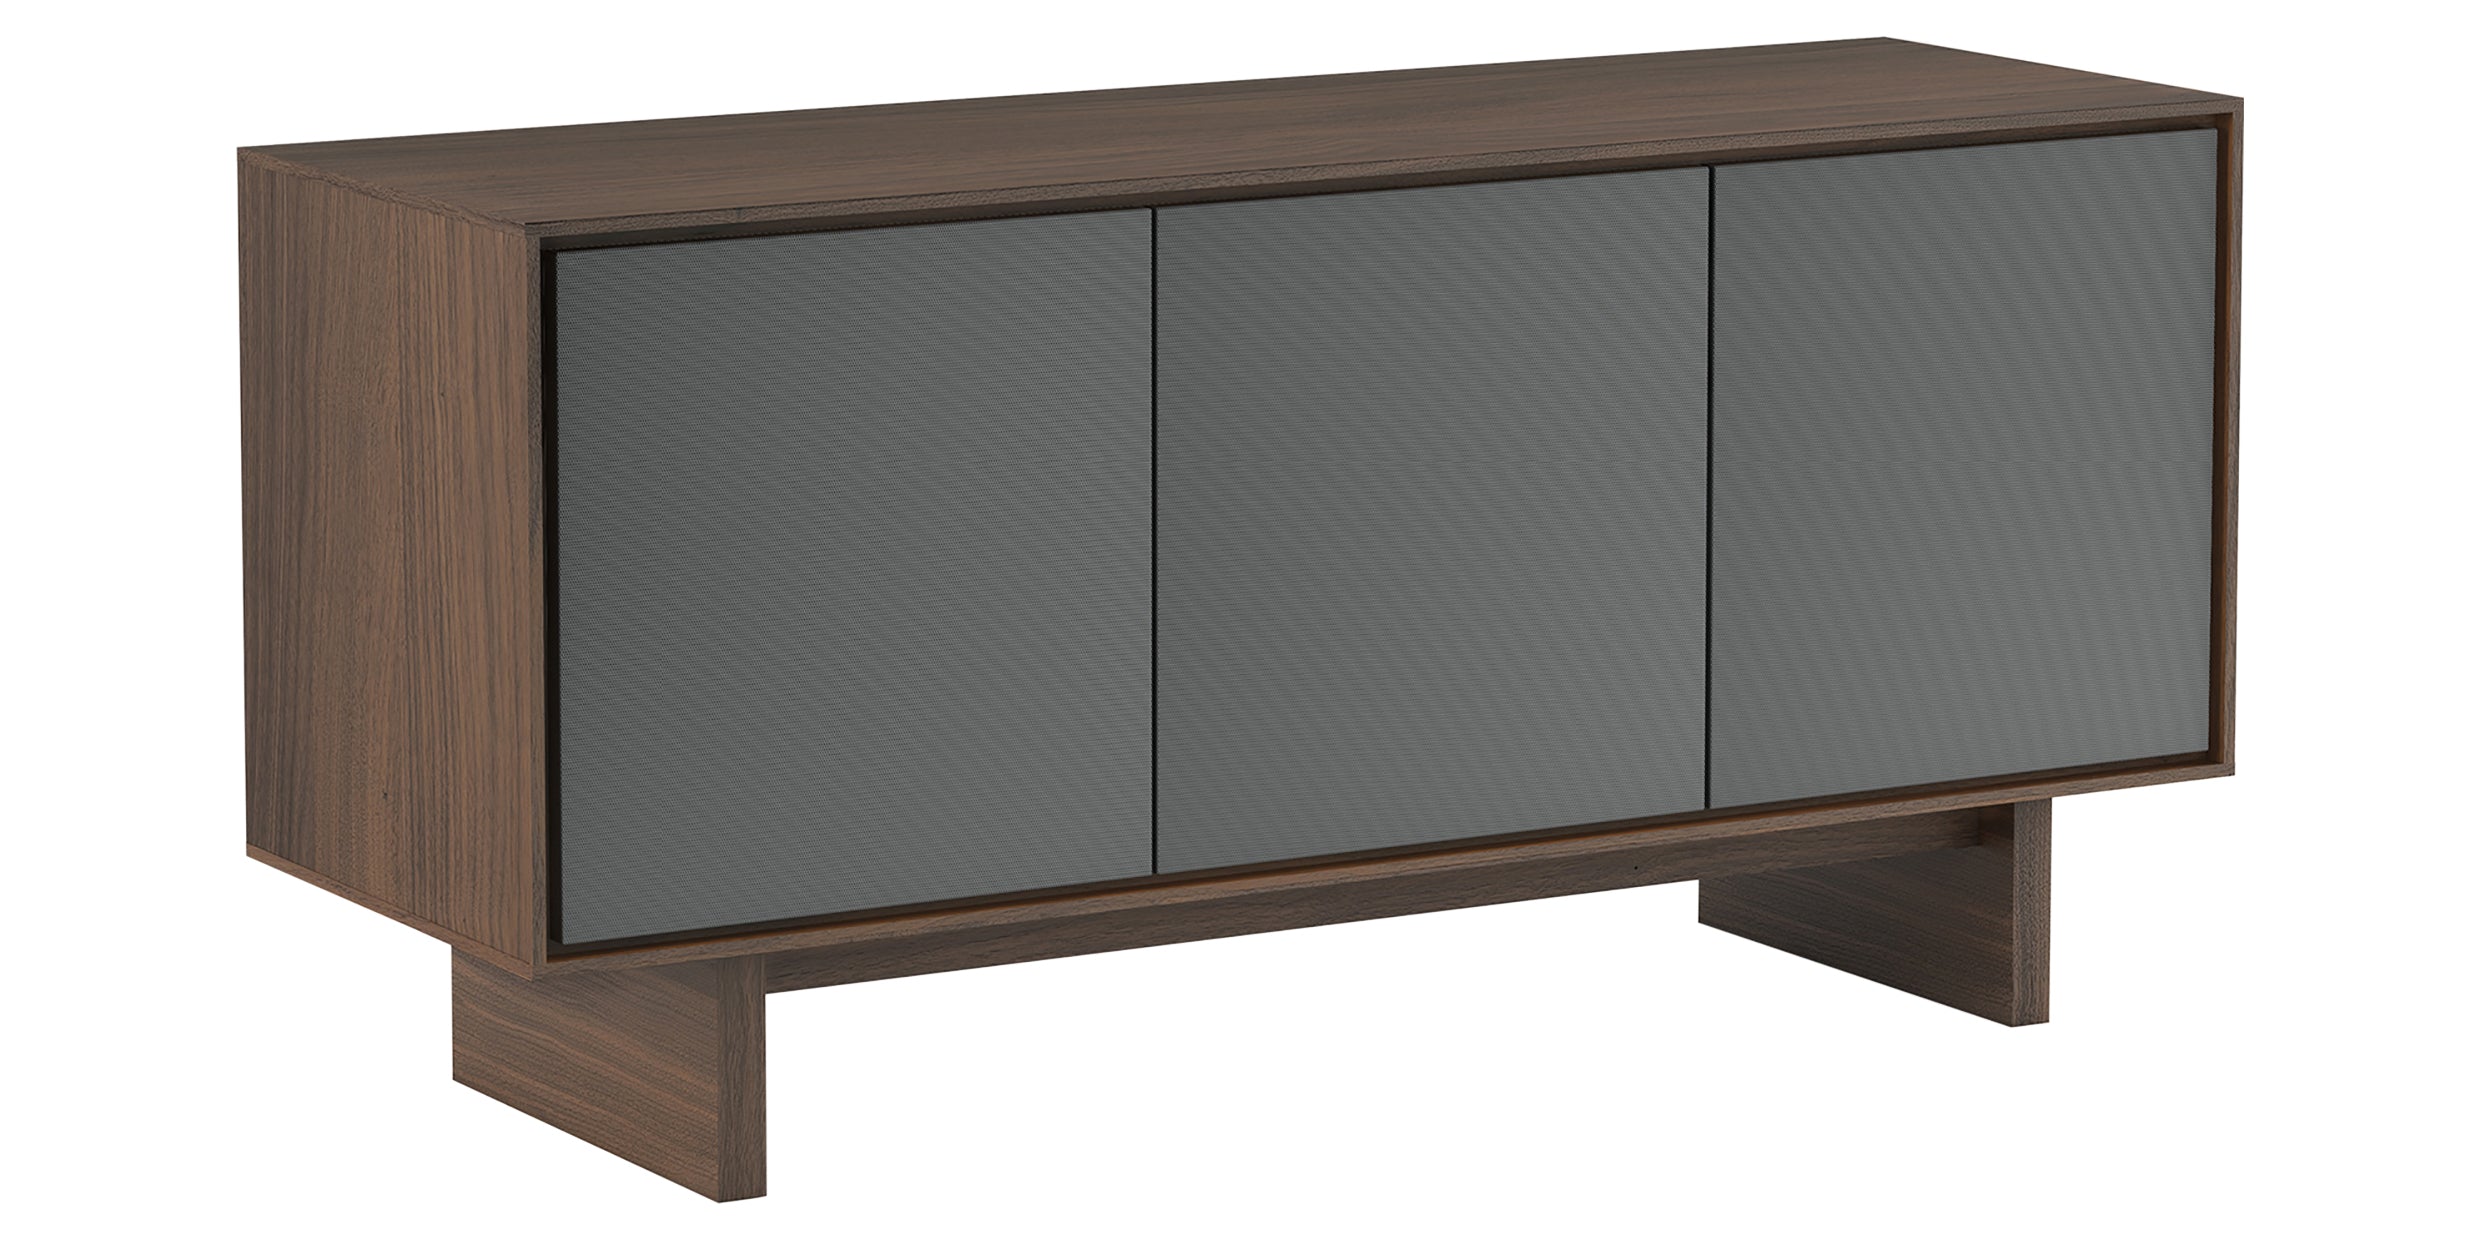 Toasted Walnut Veneer &amp; Grey Perforated Steel | BDI Octave 3 Door Media Cabinet | Valley Ridge Furniture